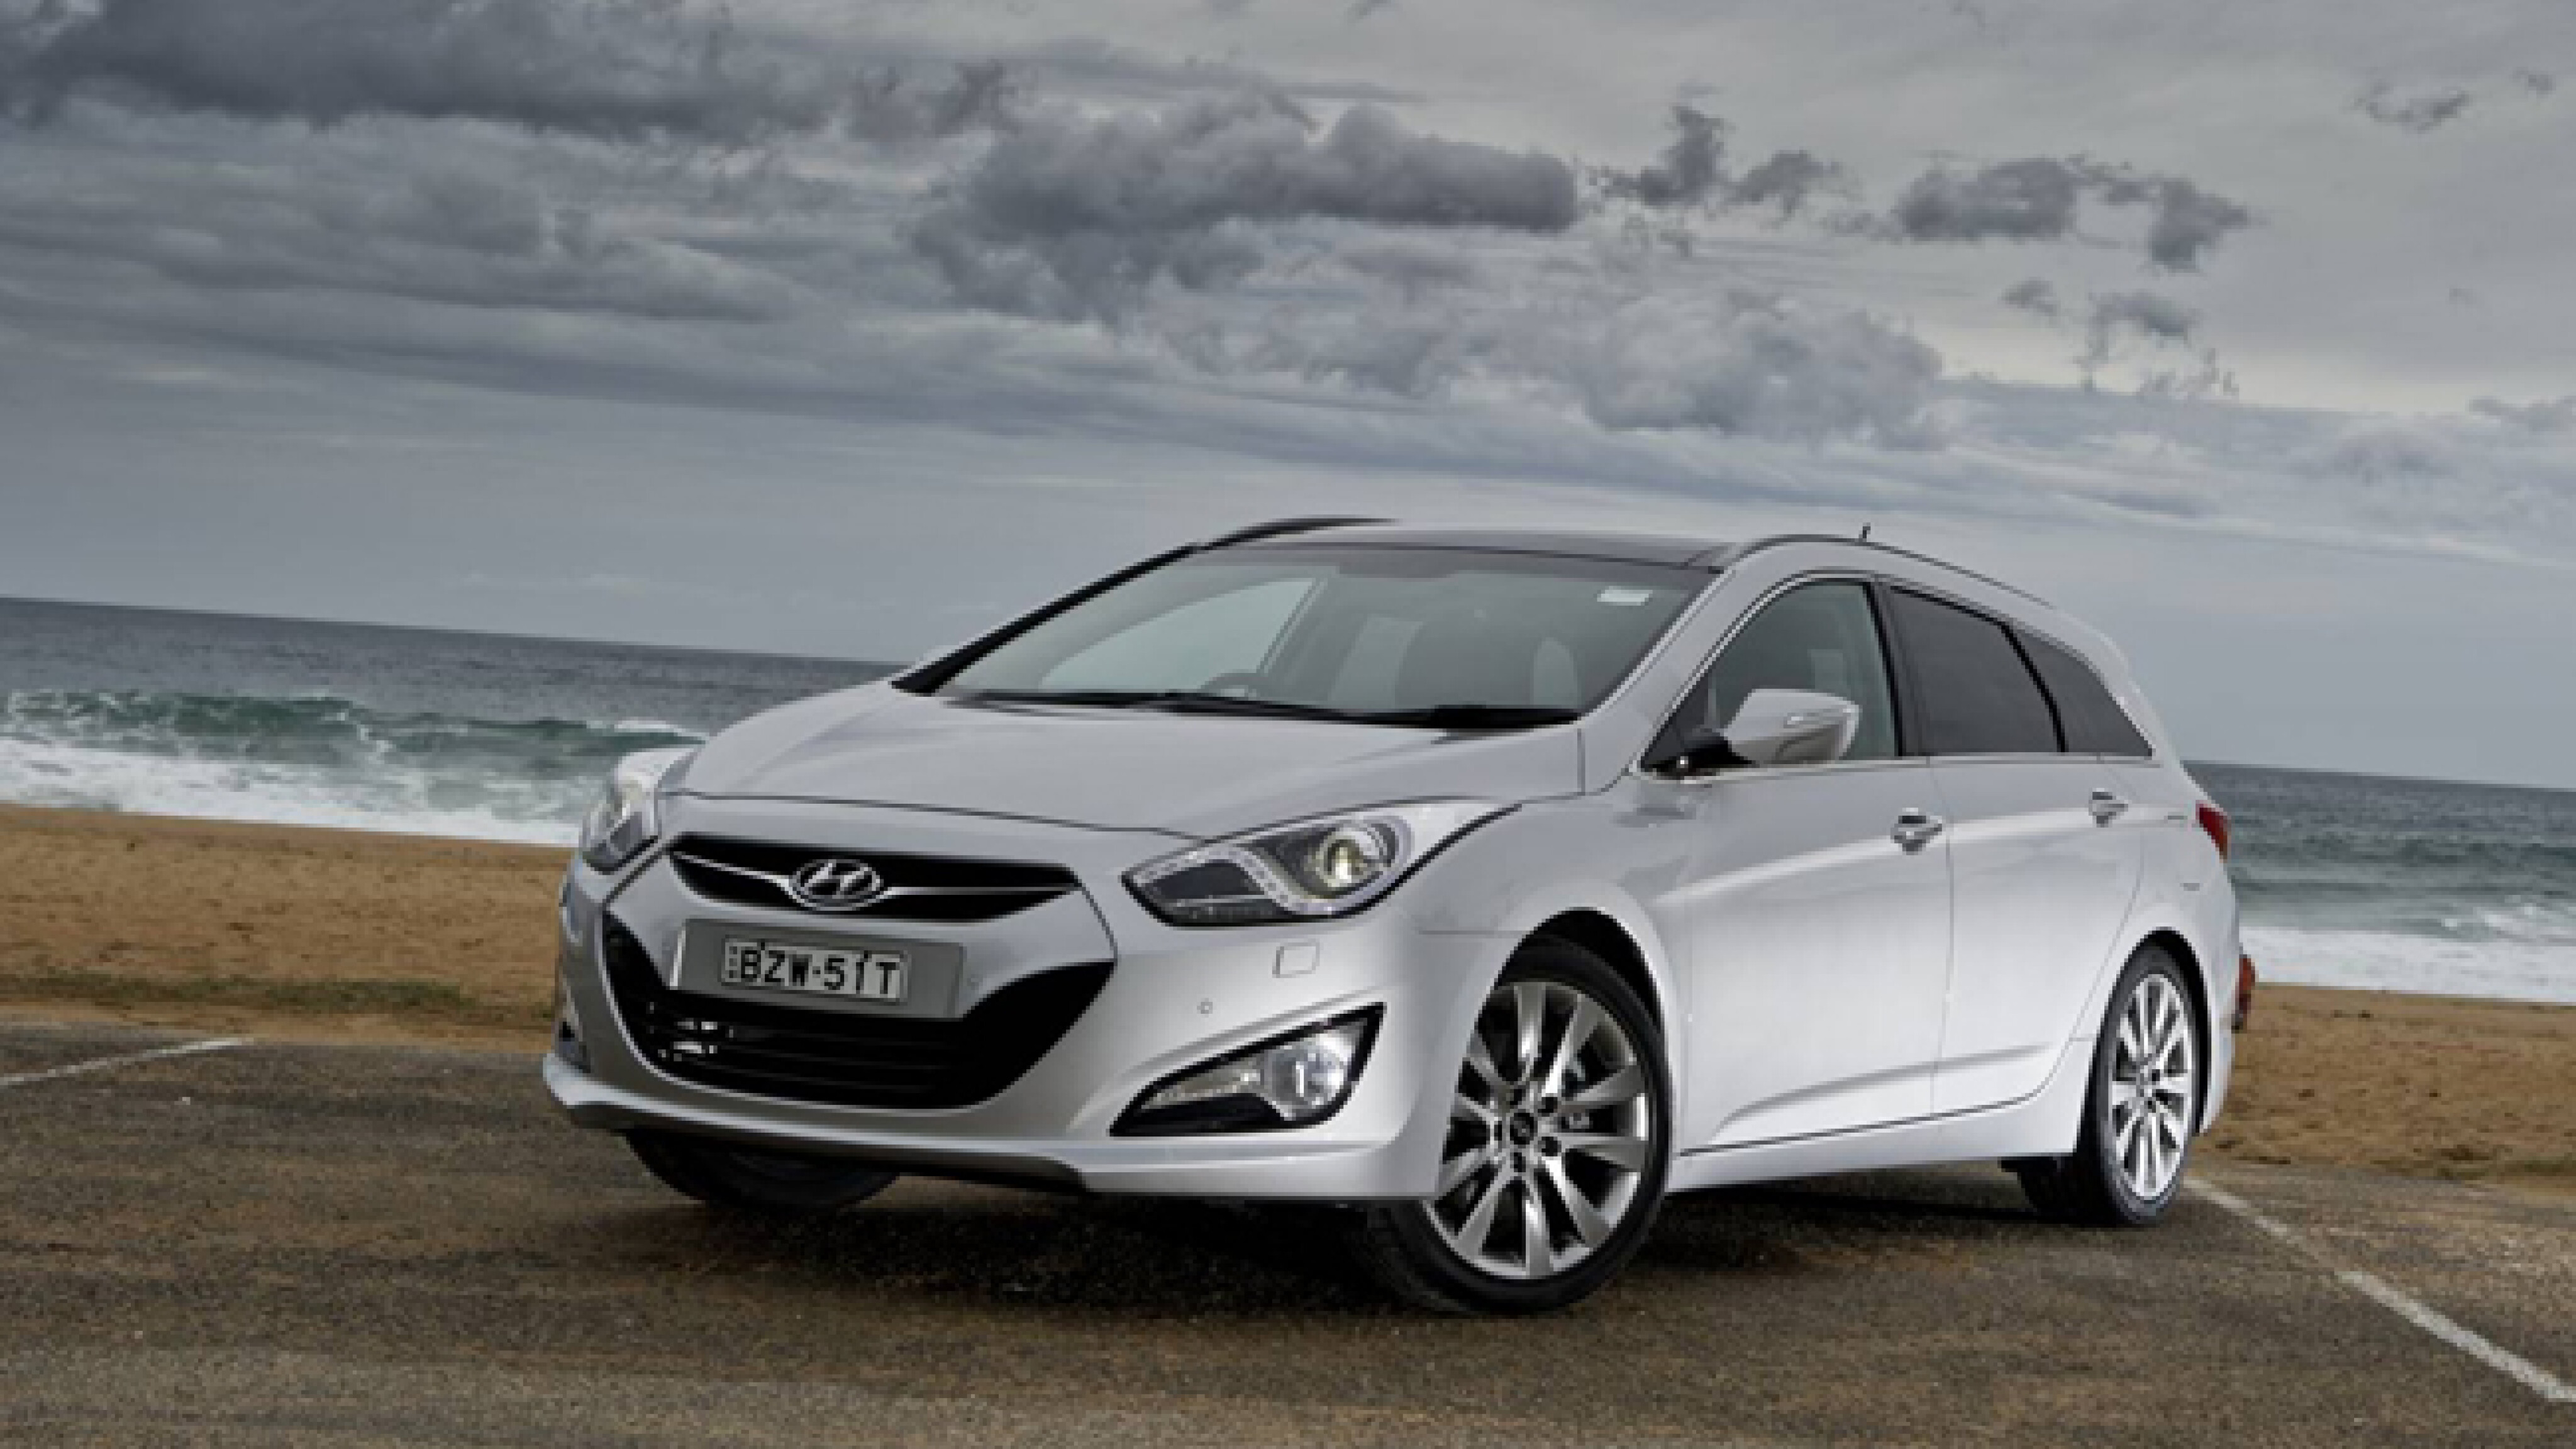 Hyundai i40 review long term report 3 - Drive